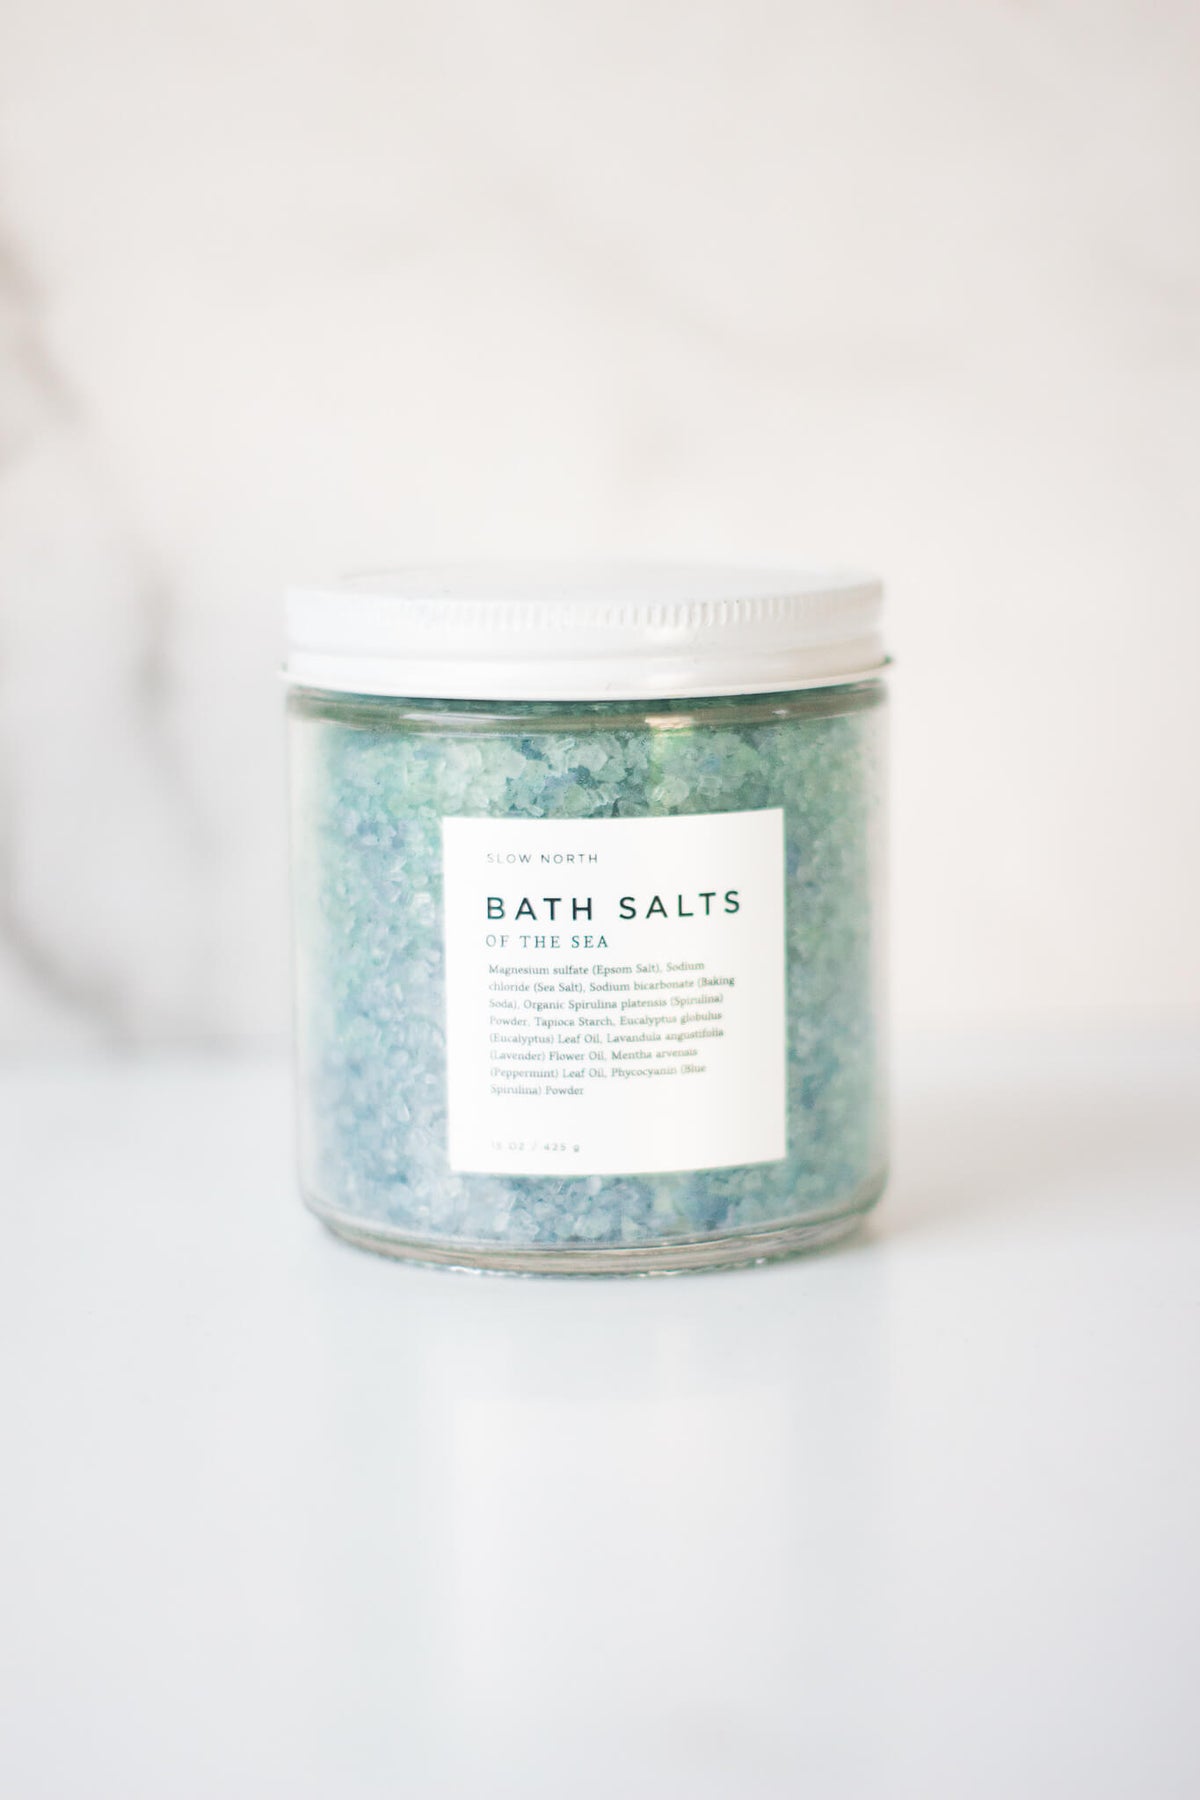 Slow North Of the Sea Bath Salts